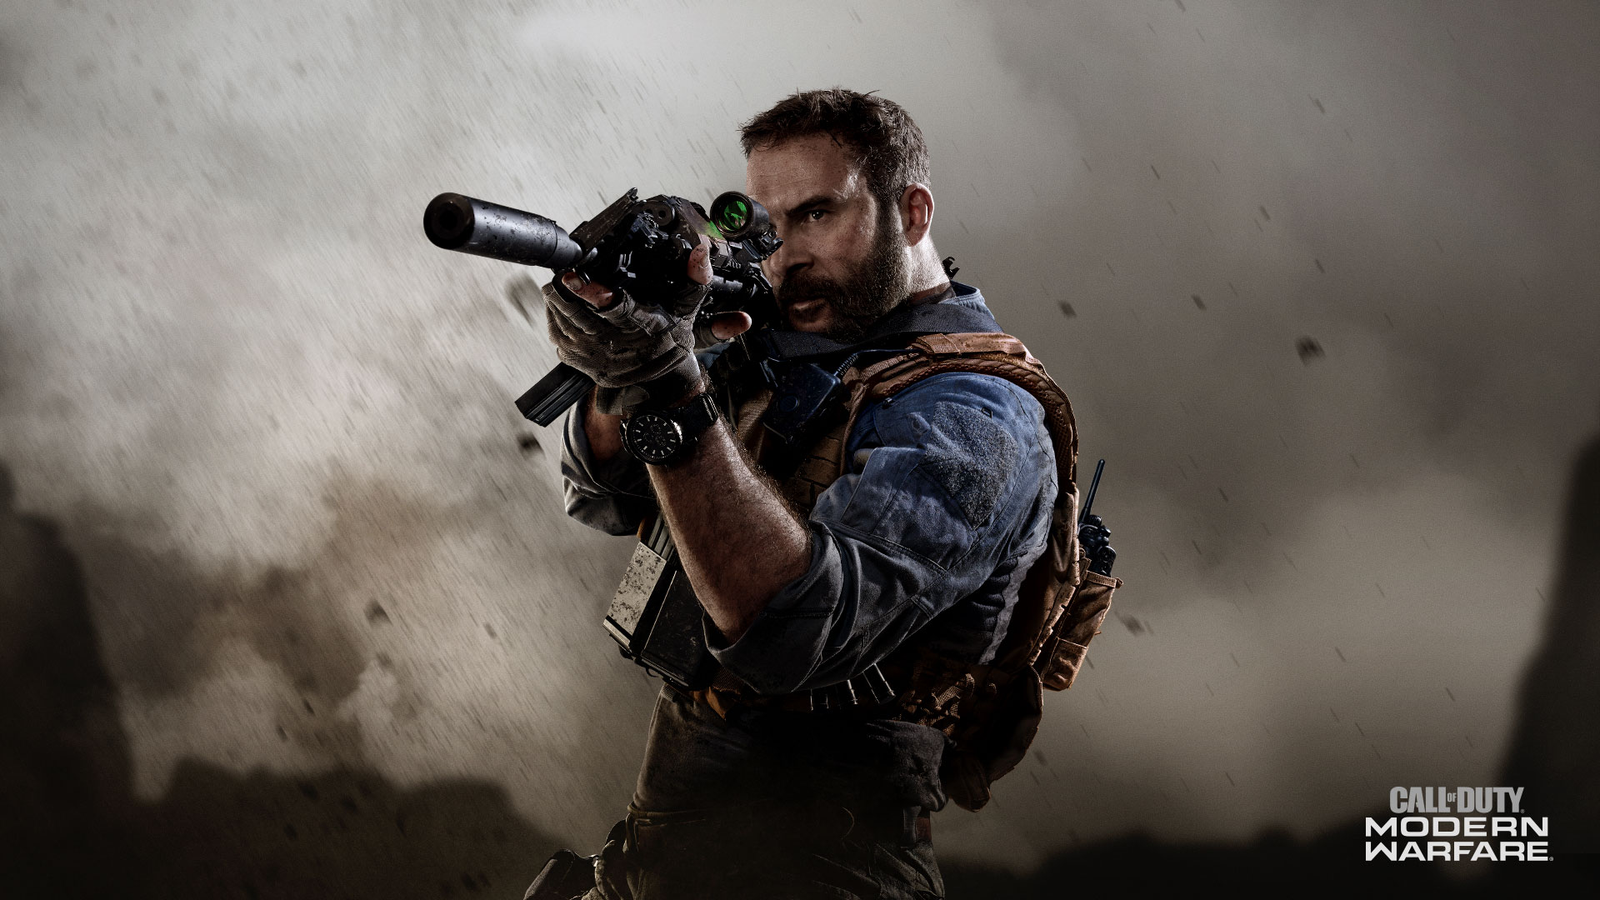 Call of Duty's new operator looks like a popular Rainbow Six Siege